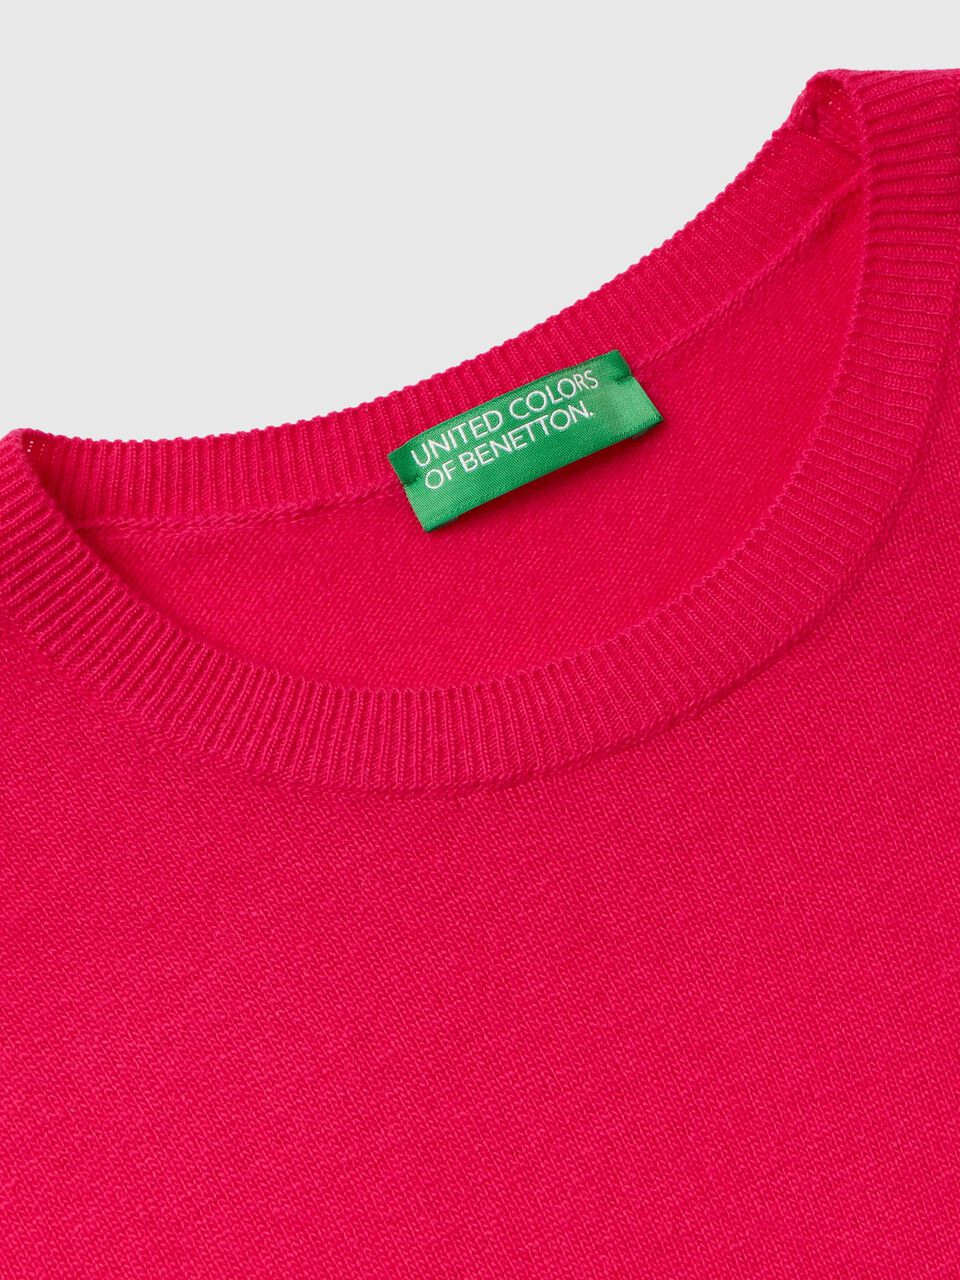 Fuchsia crew neck sweater in Merino wool - Fuchsia | Benetton